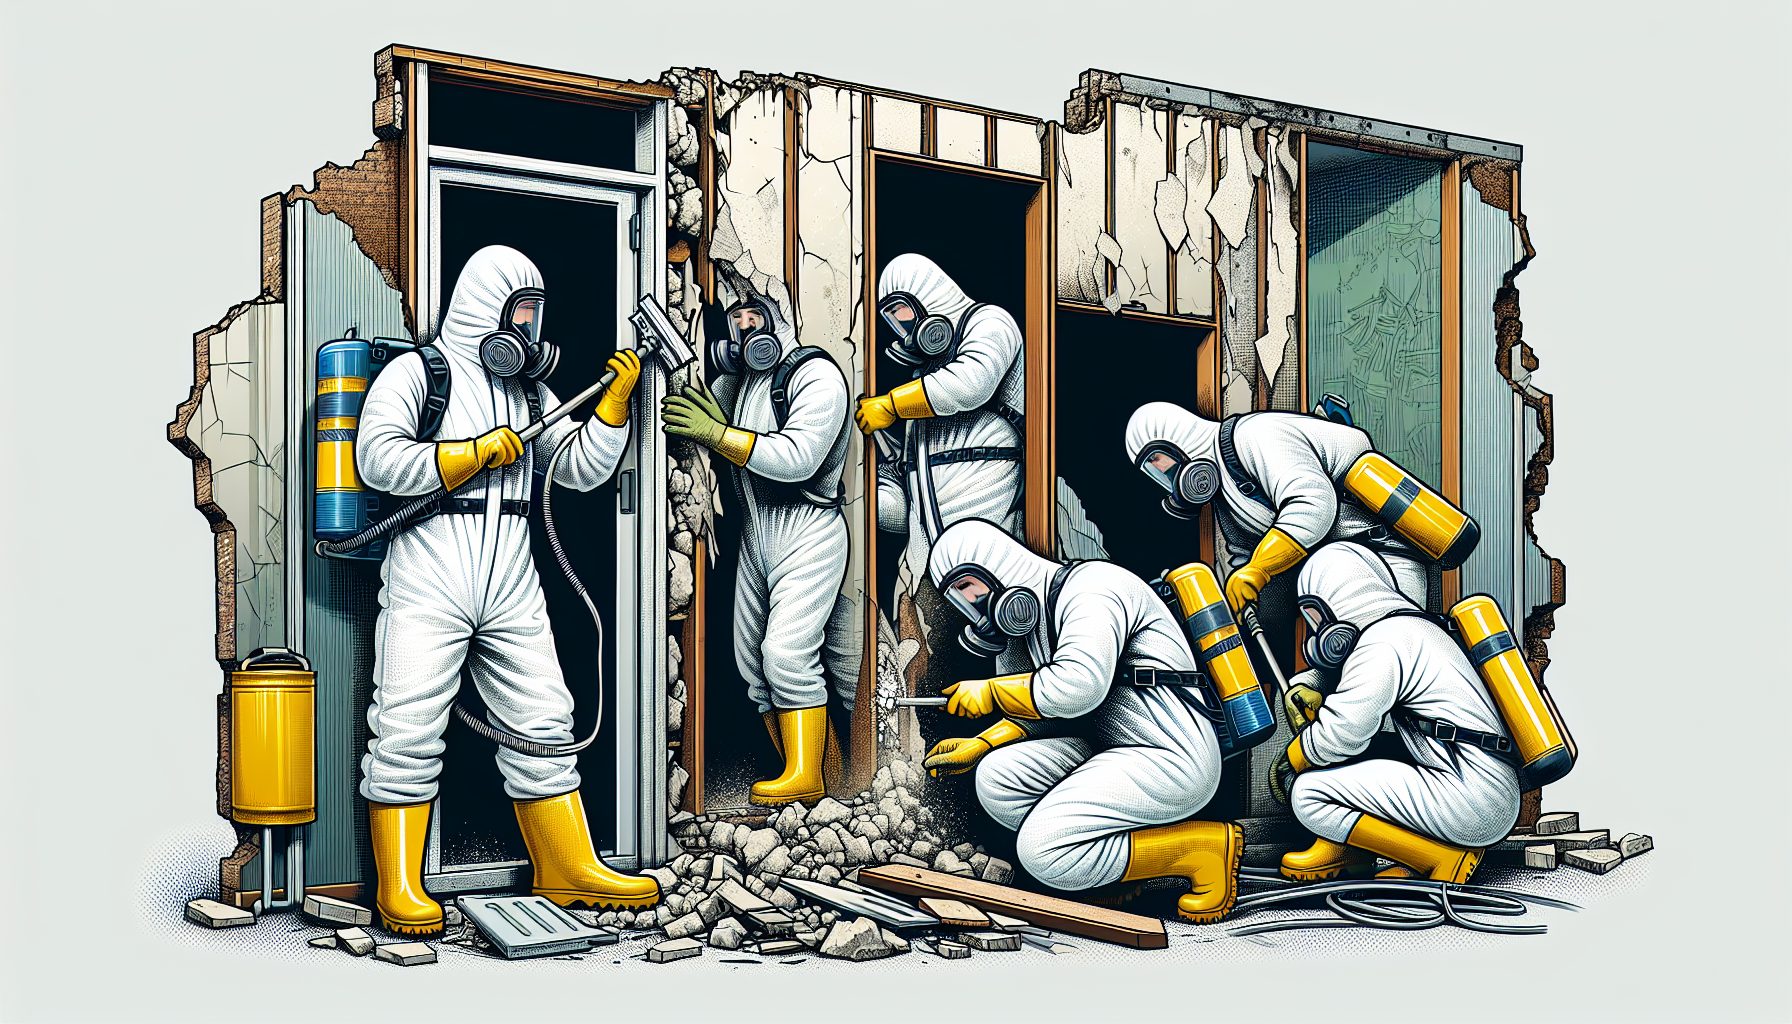 Illustration of hazardous materials management